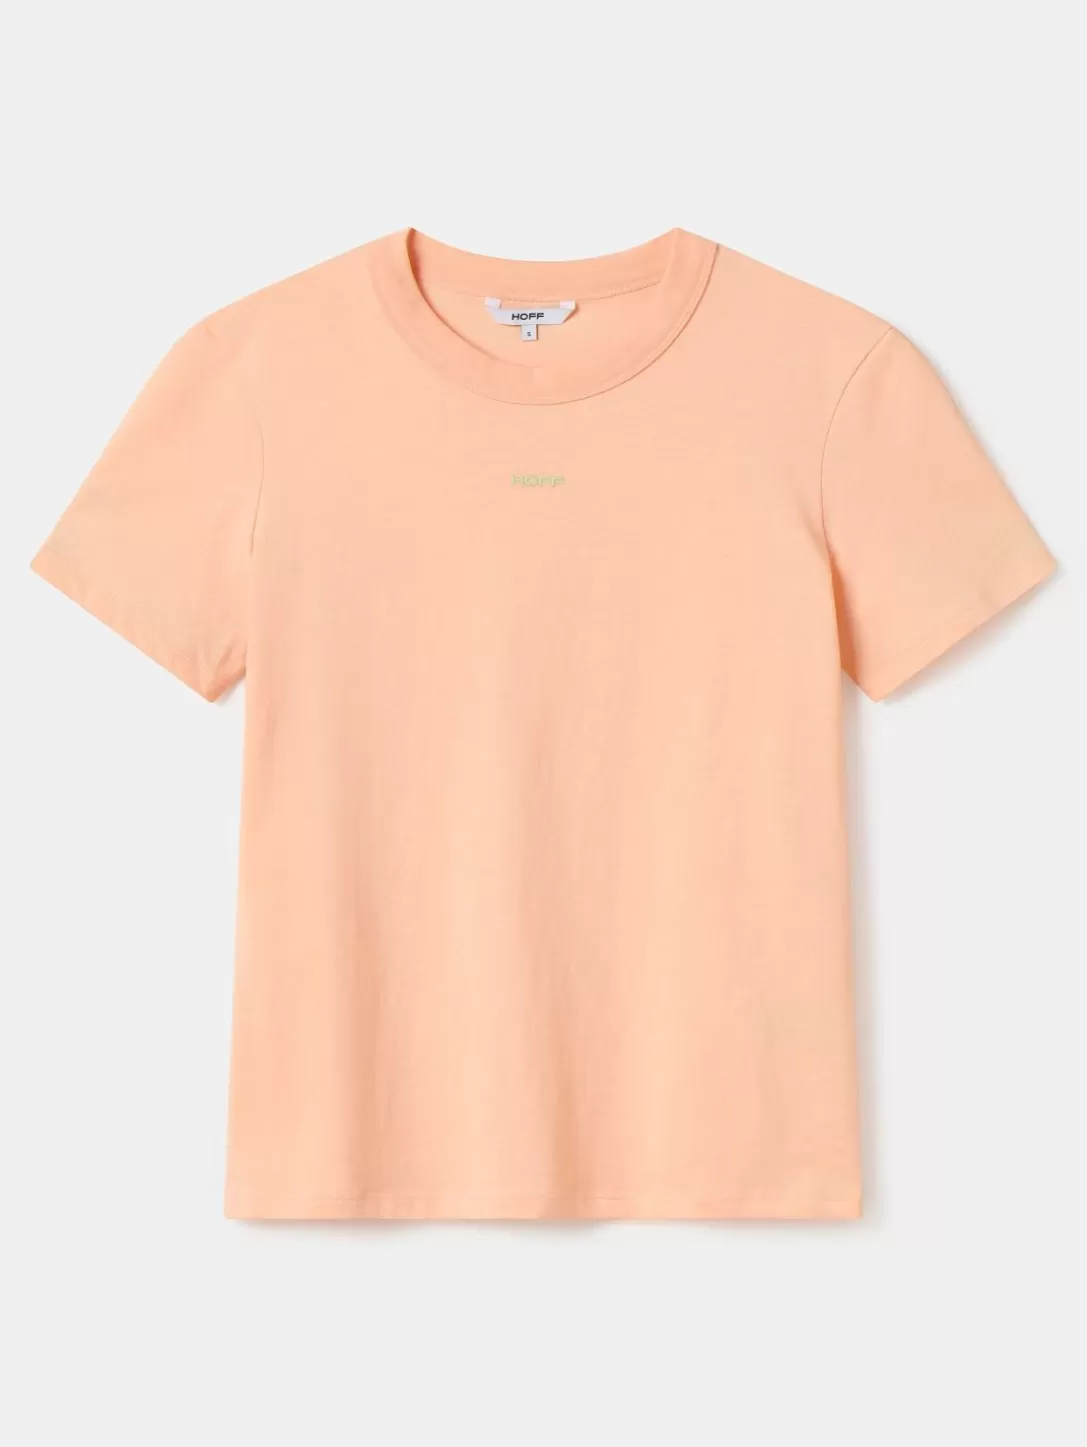 HOFF T-Shirt Cabrera Orange Hot